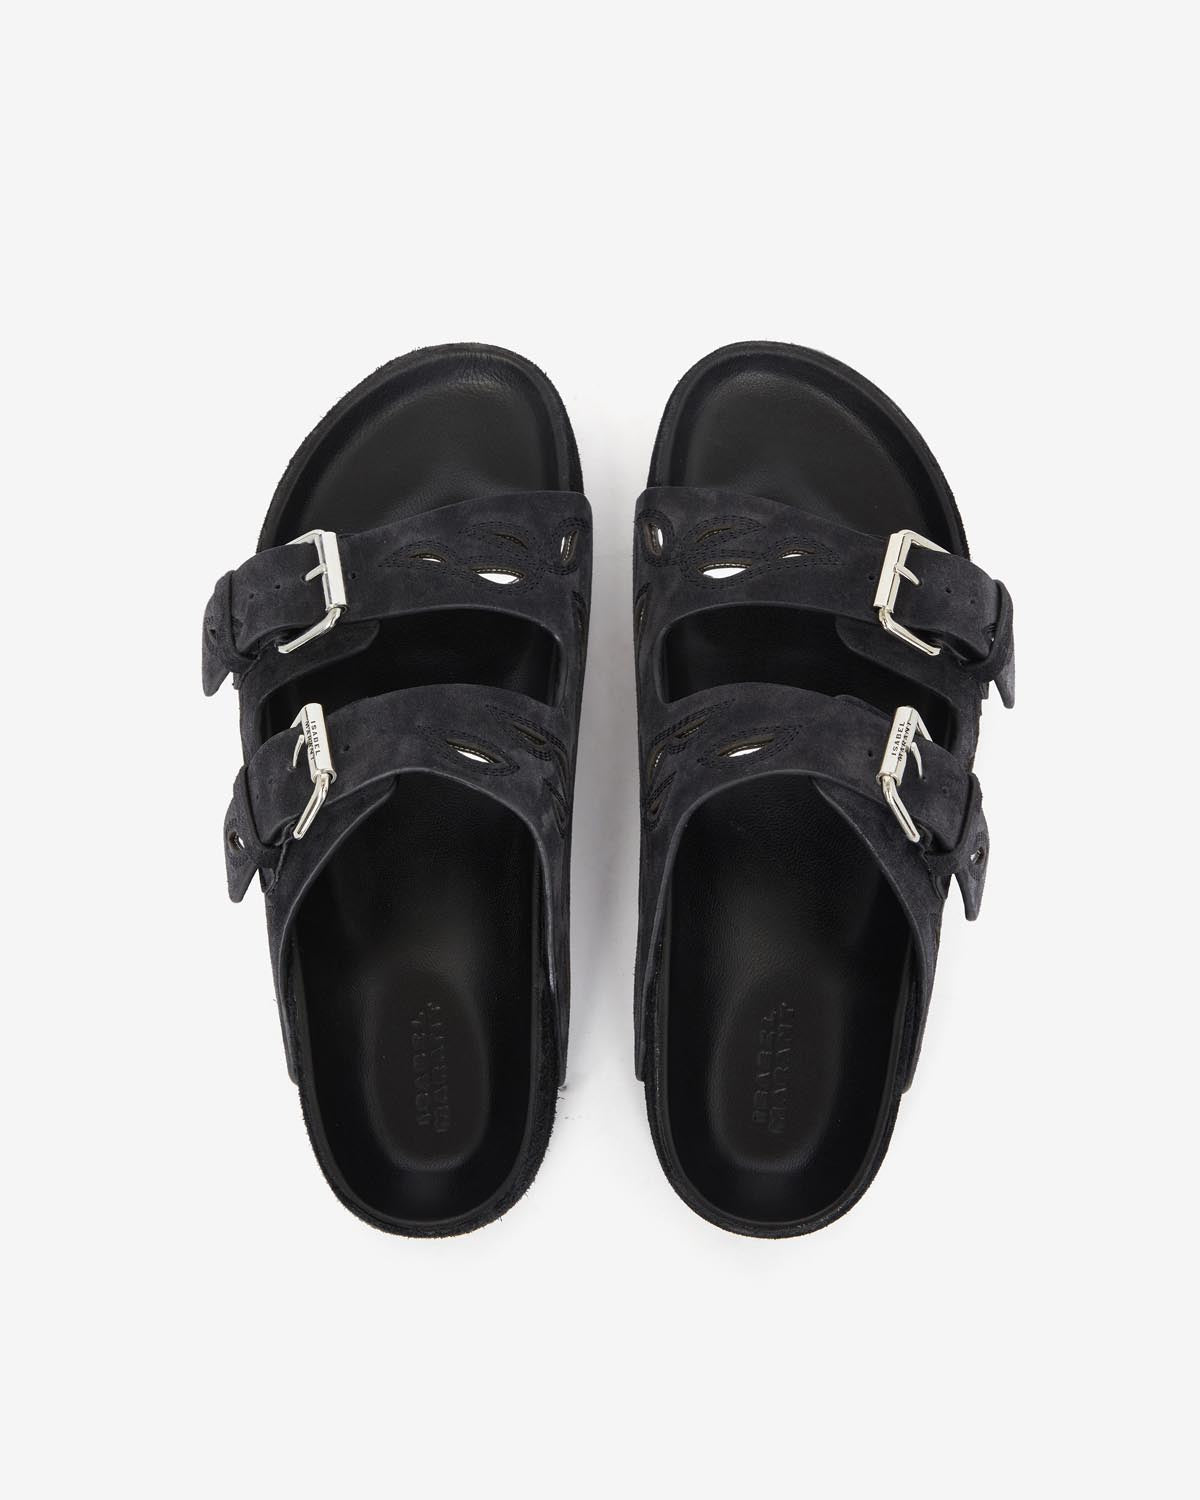 Lennyo sandals Woman Faded black-silver 1